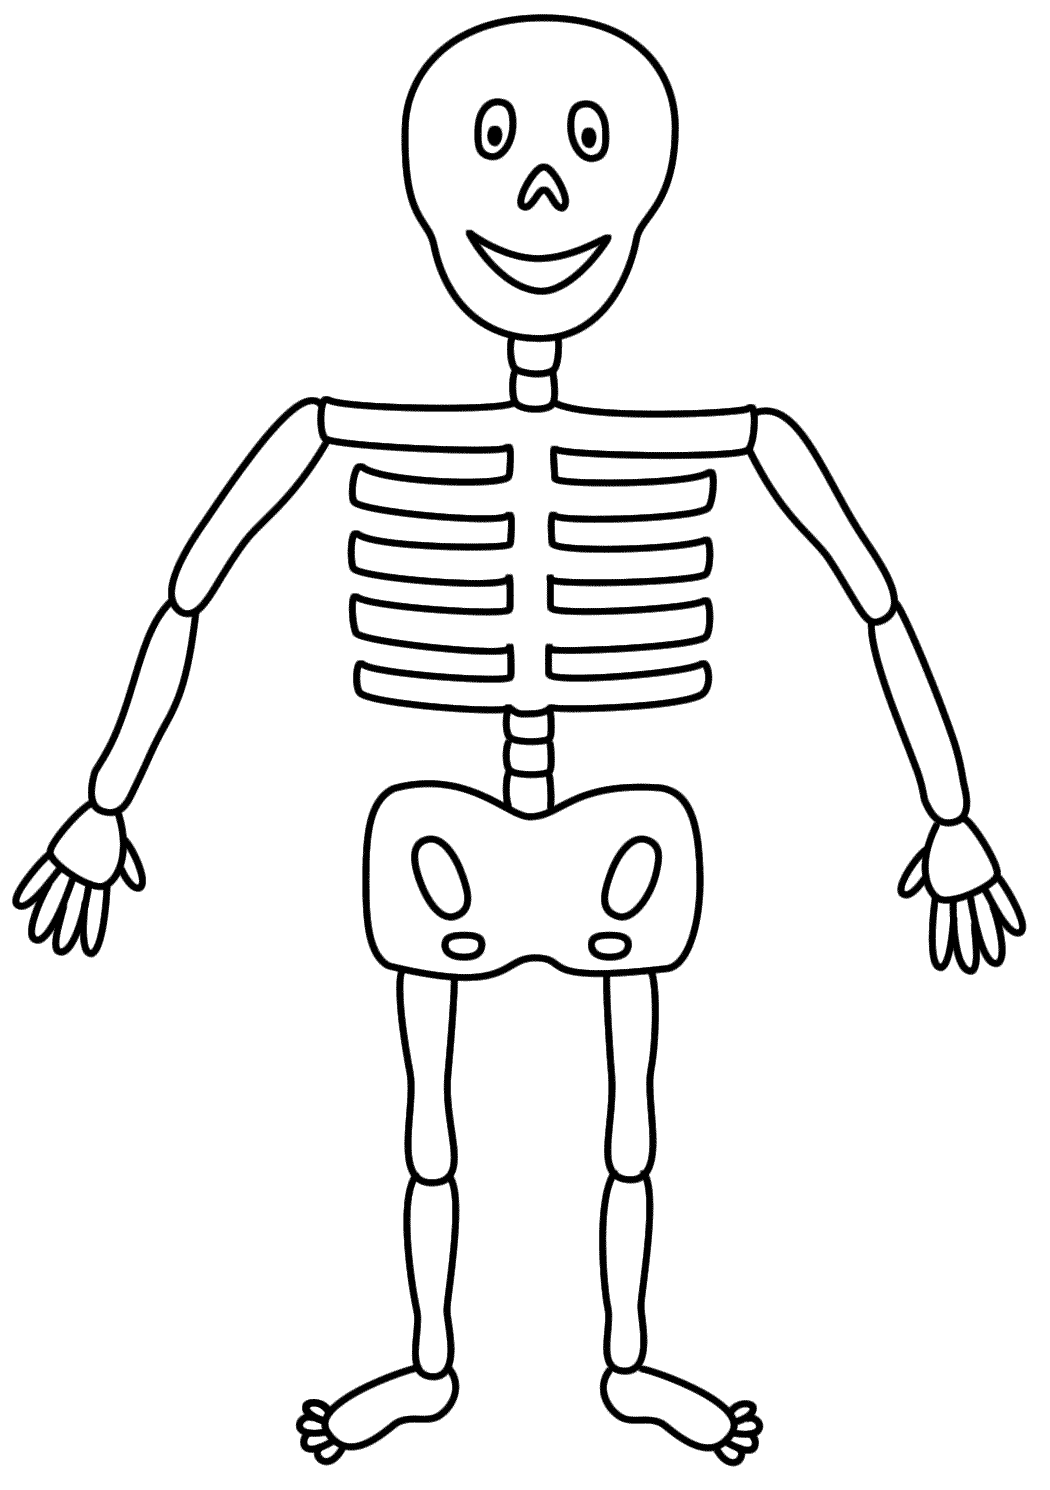 Skeleton - Coloring Page (Halloween)